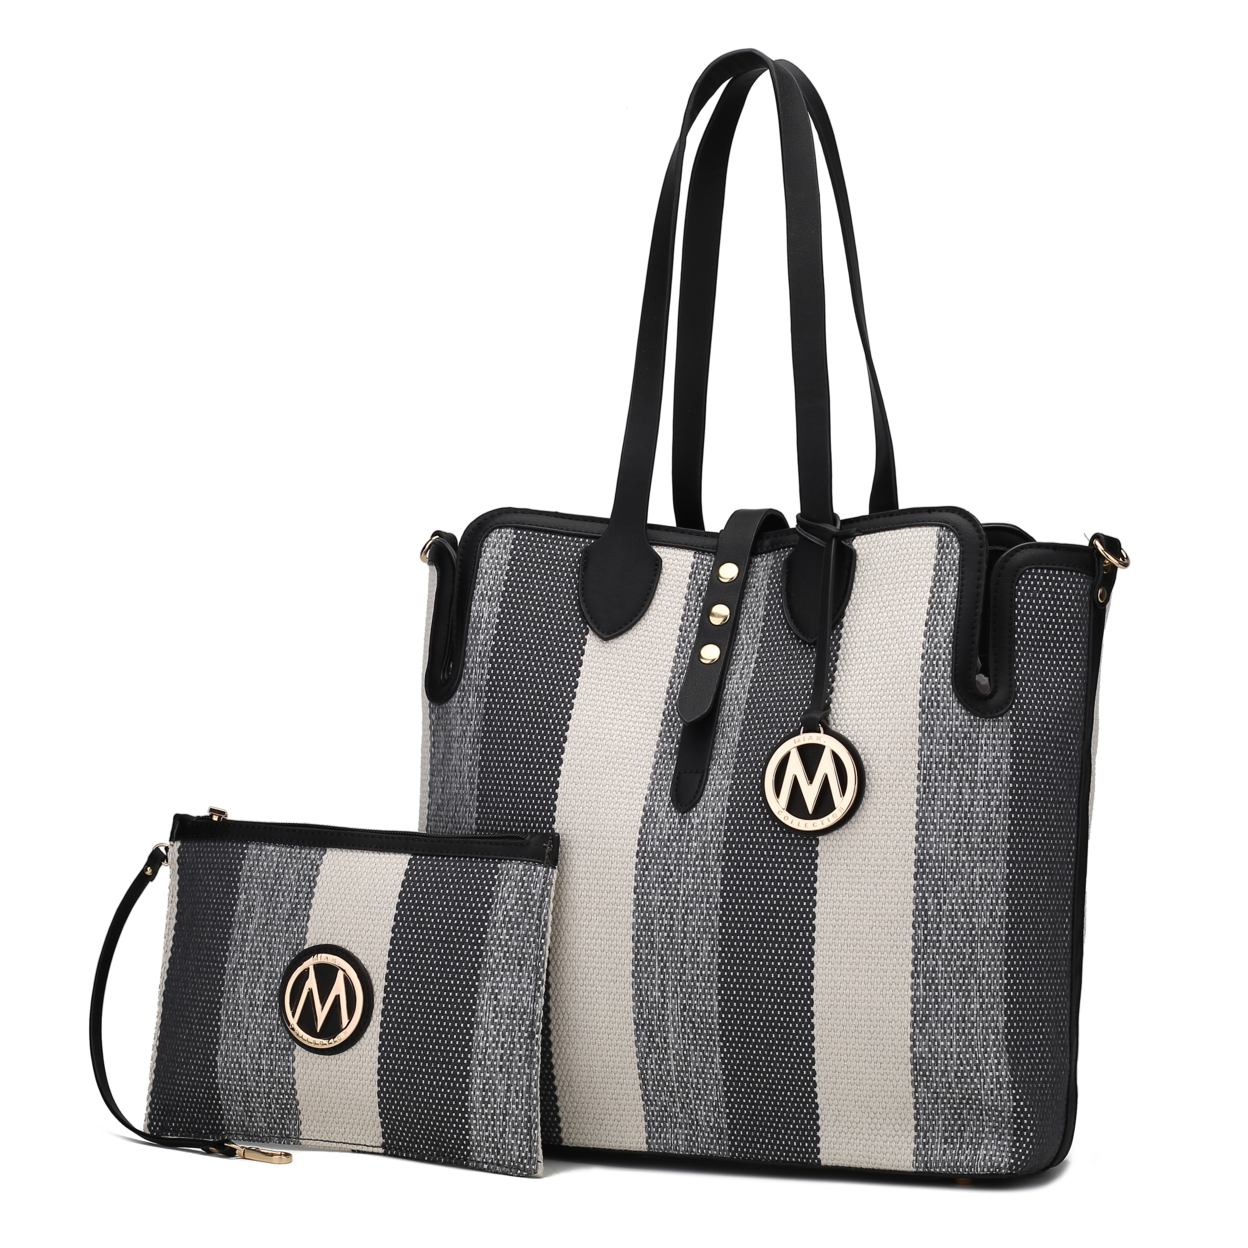 MKF Collection Juliana Oversize Tote Handbag & Wristlet By Mia K. - Charcoal Combo